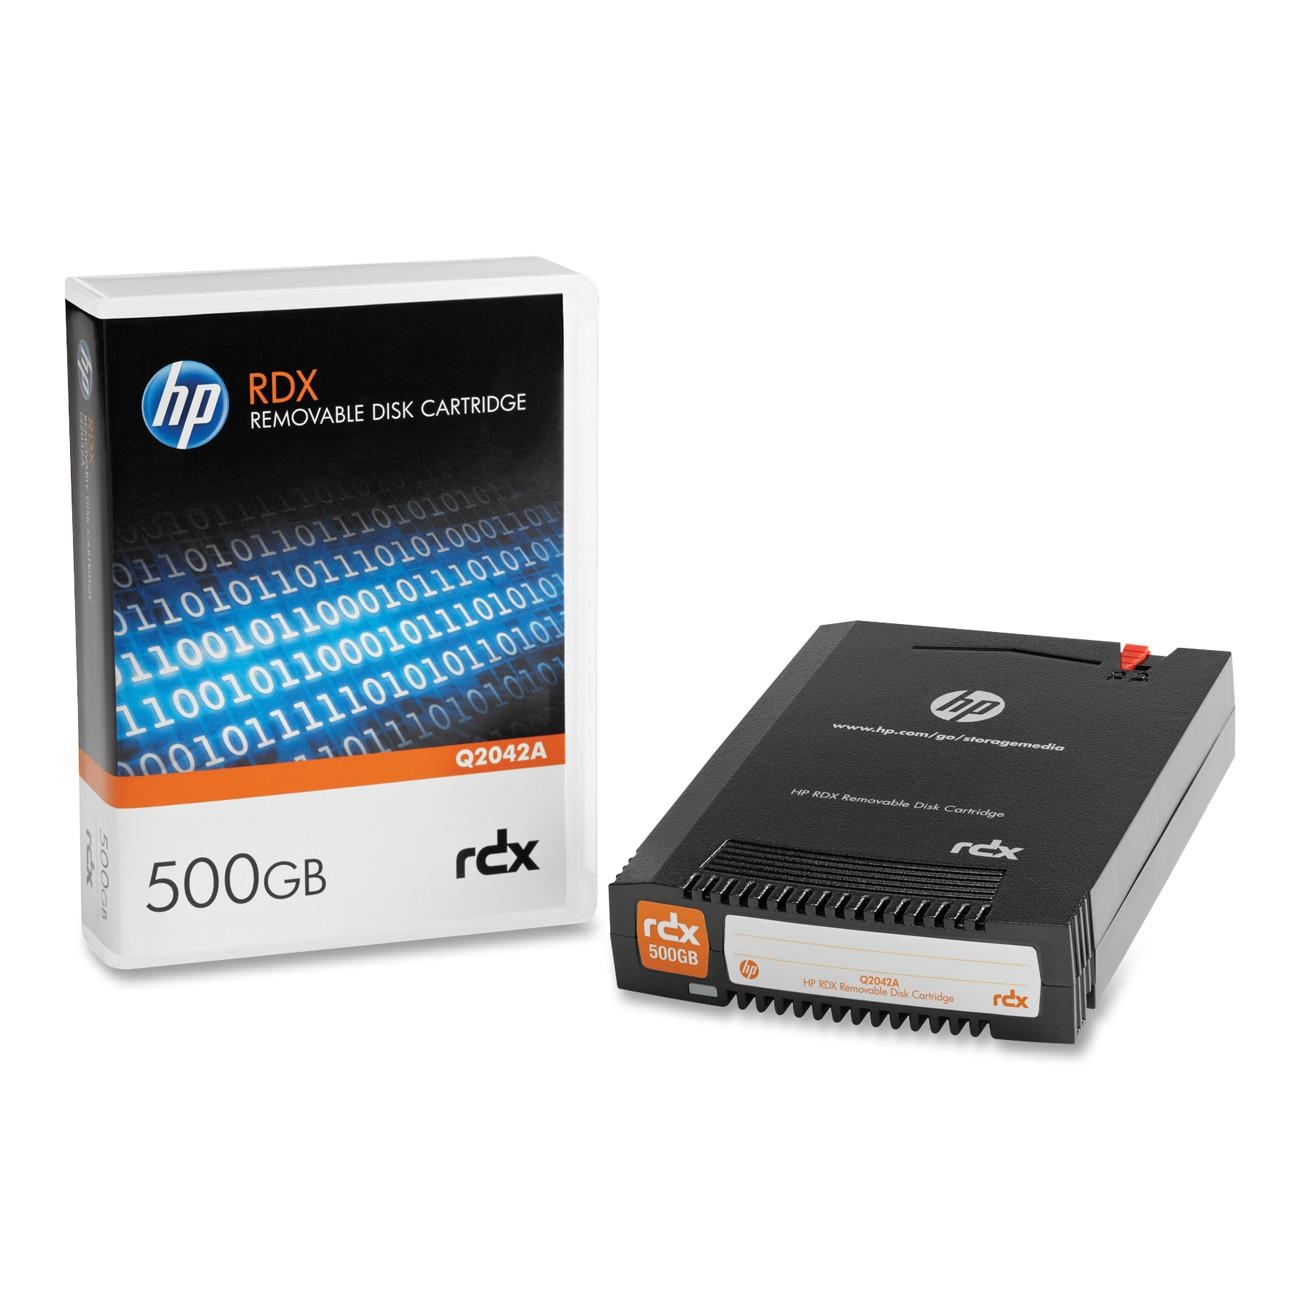 CARTUCHO DE DISCO HP RDX DE 500 GB EXTRAIBLE